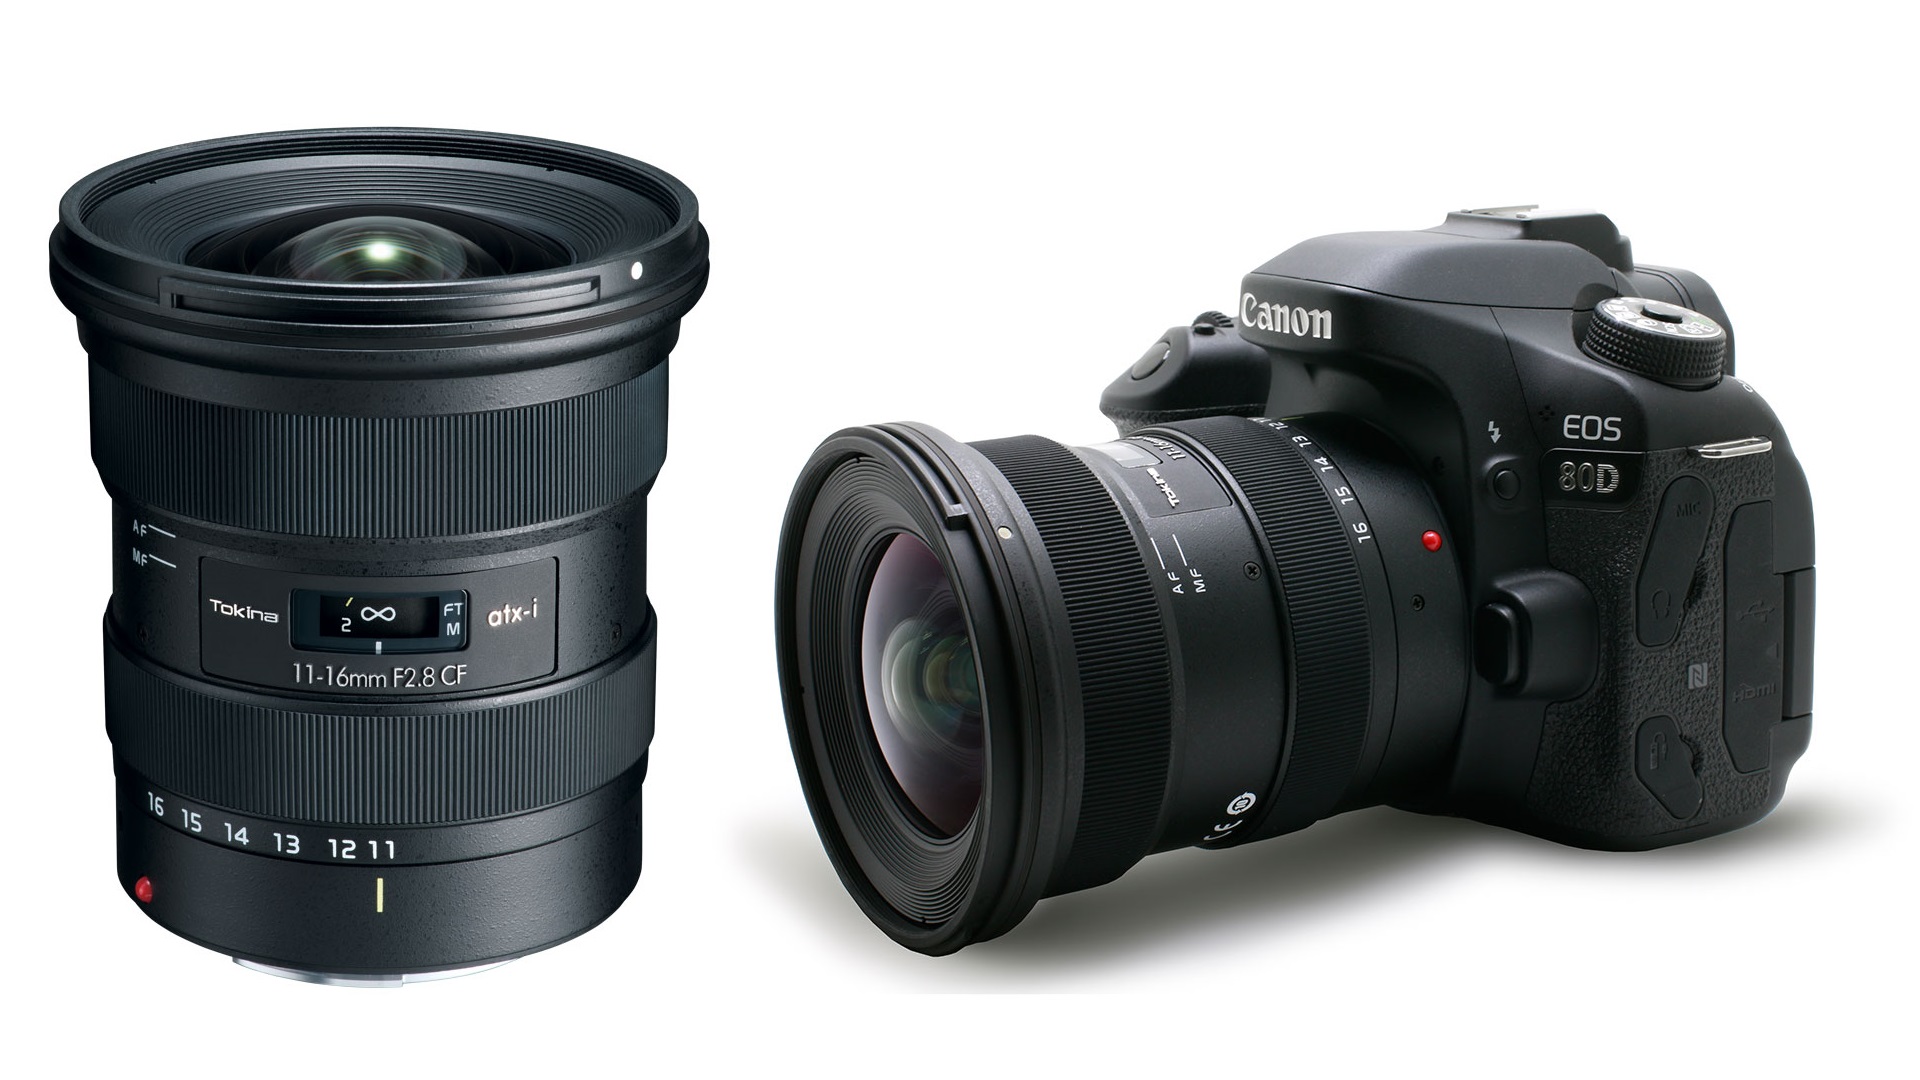 Tokina atx-i 11-16mm f/2.8 CF Lens Announced - Popular Ultra-Wide